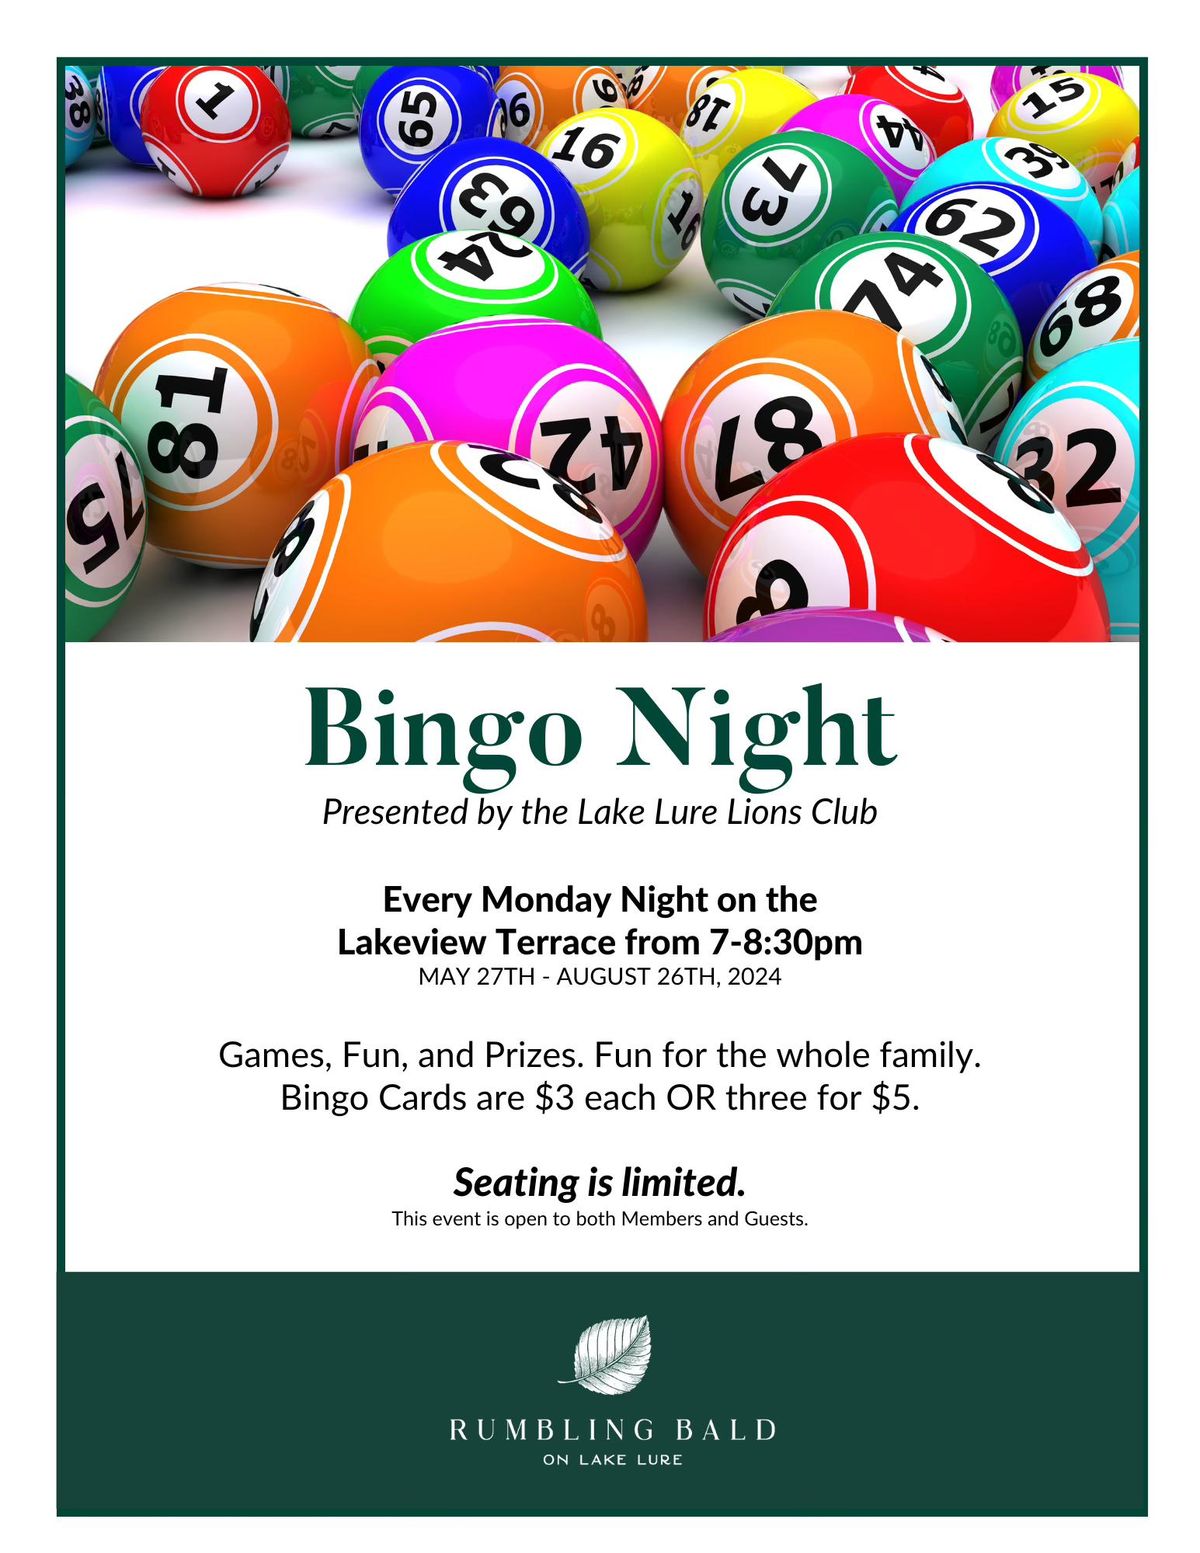 Bingo Night presented by the Lions Club